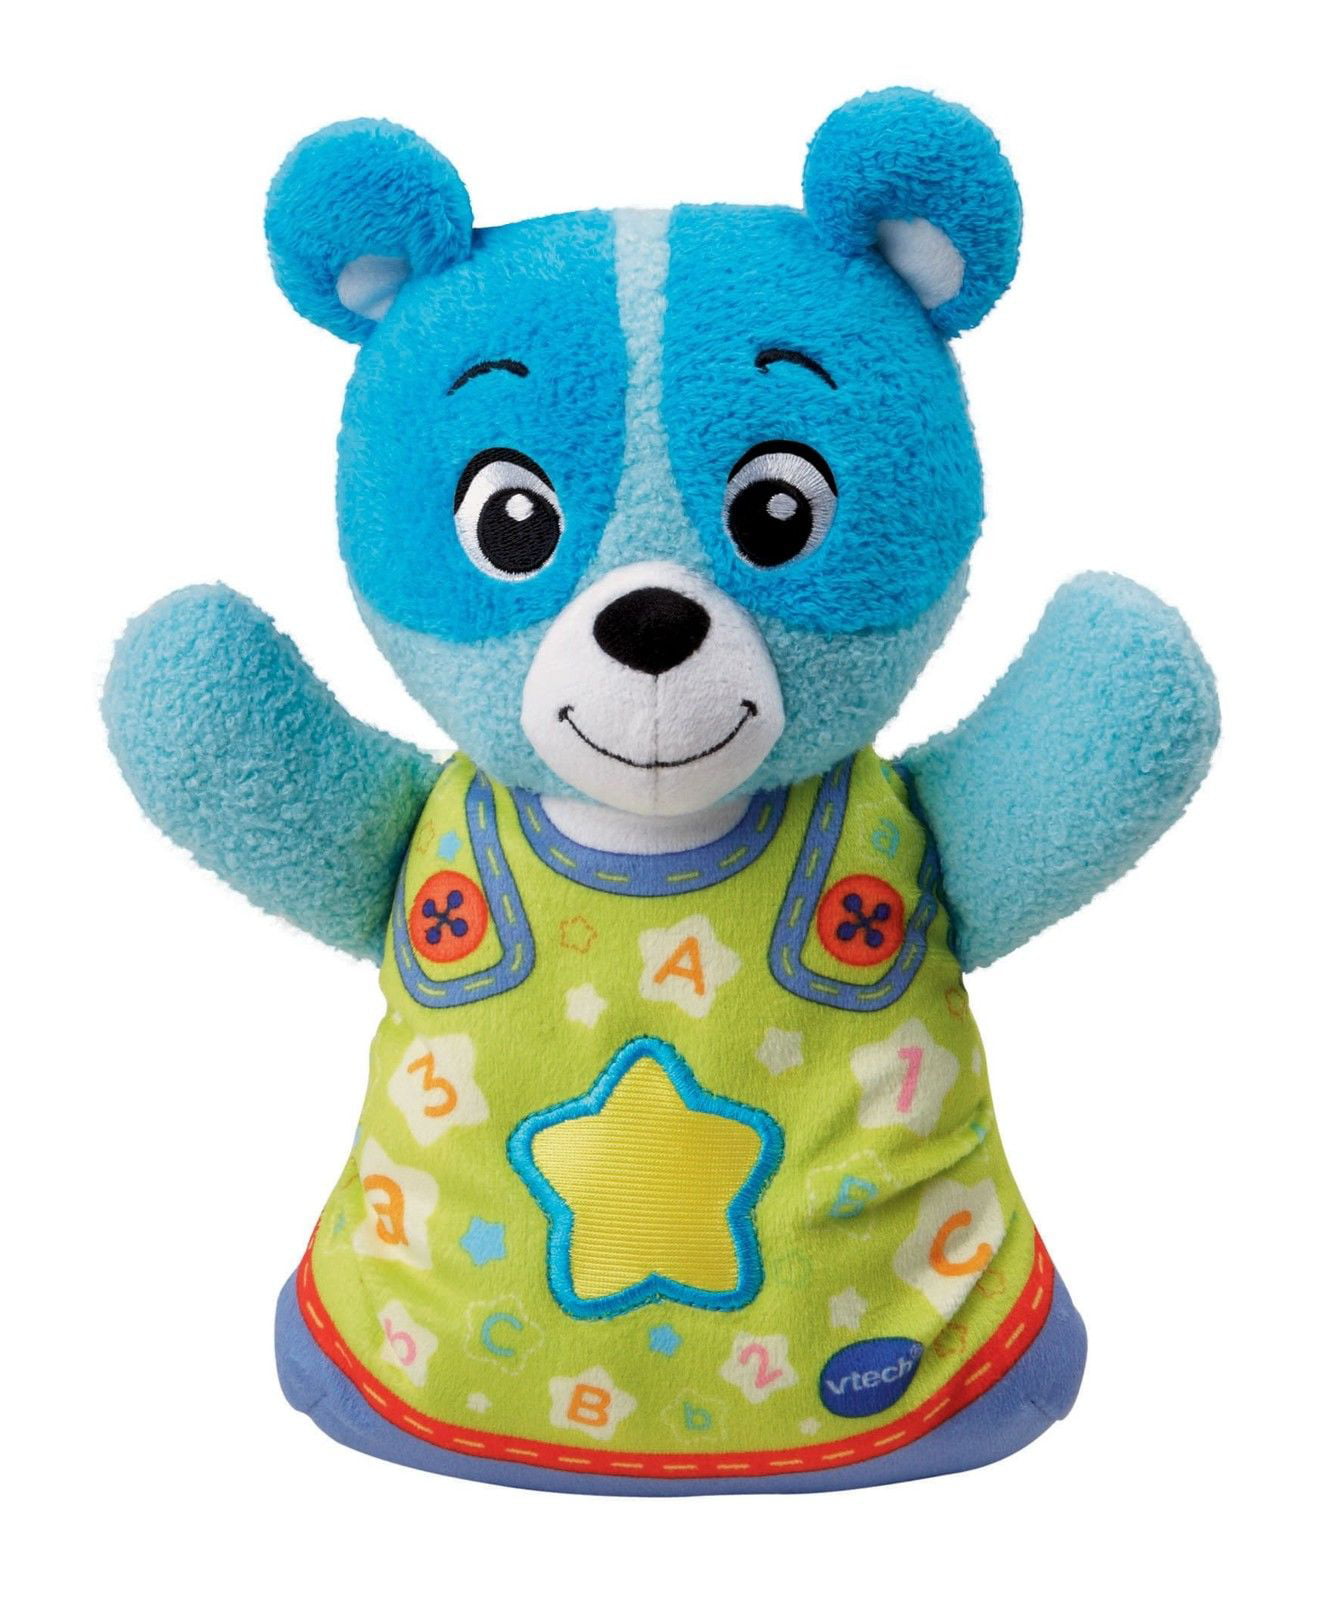 Teddy Bear Toys Doll Bedtime Blue VTech Baby Soothing Song Slumbers Kids newborn 